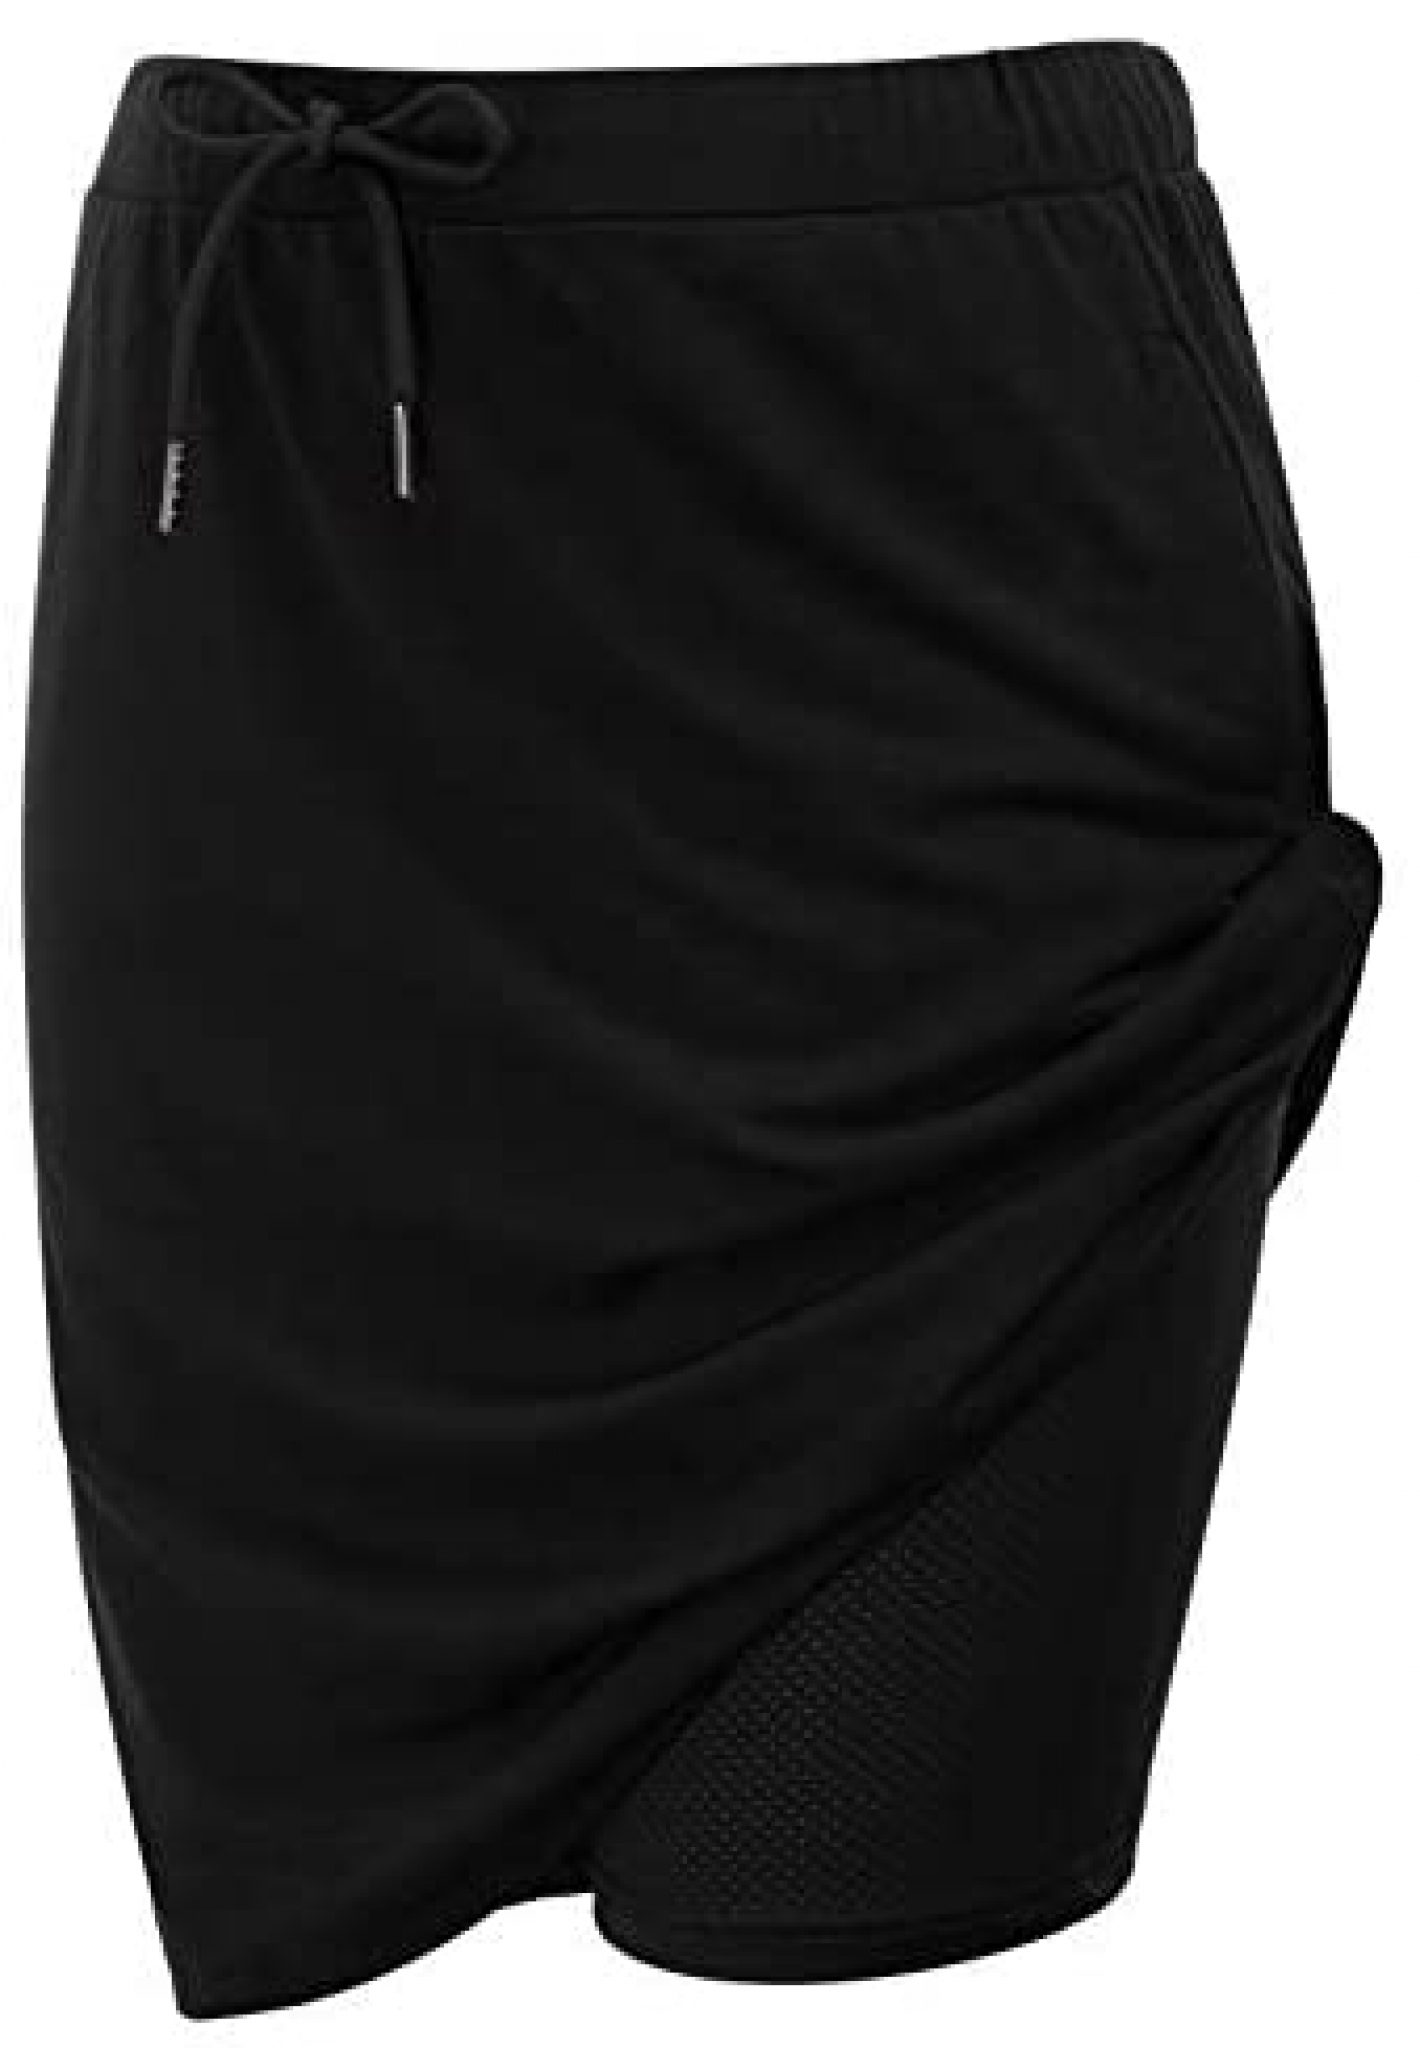 JACK SMITH Women's Stretchy Knee Length Skirt Athletic Skort Drawstring ...